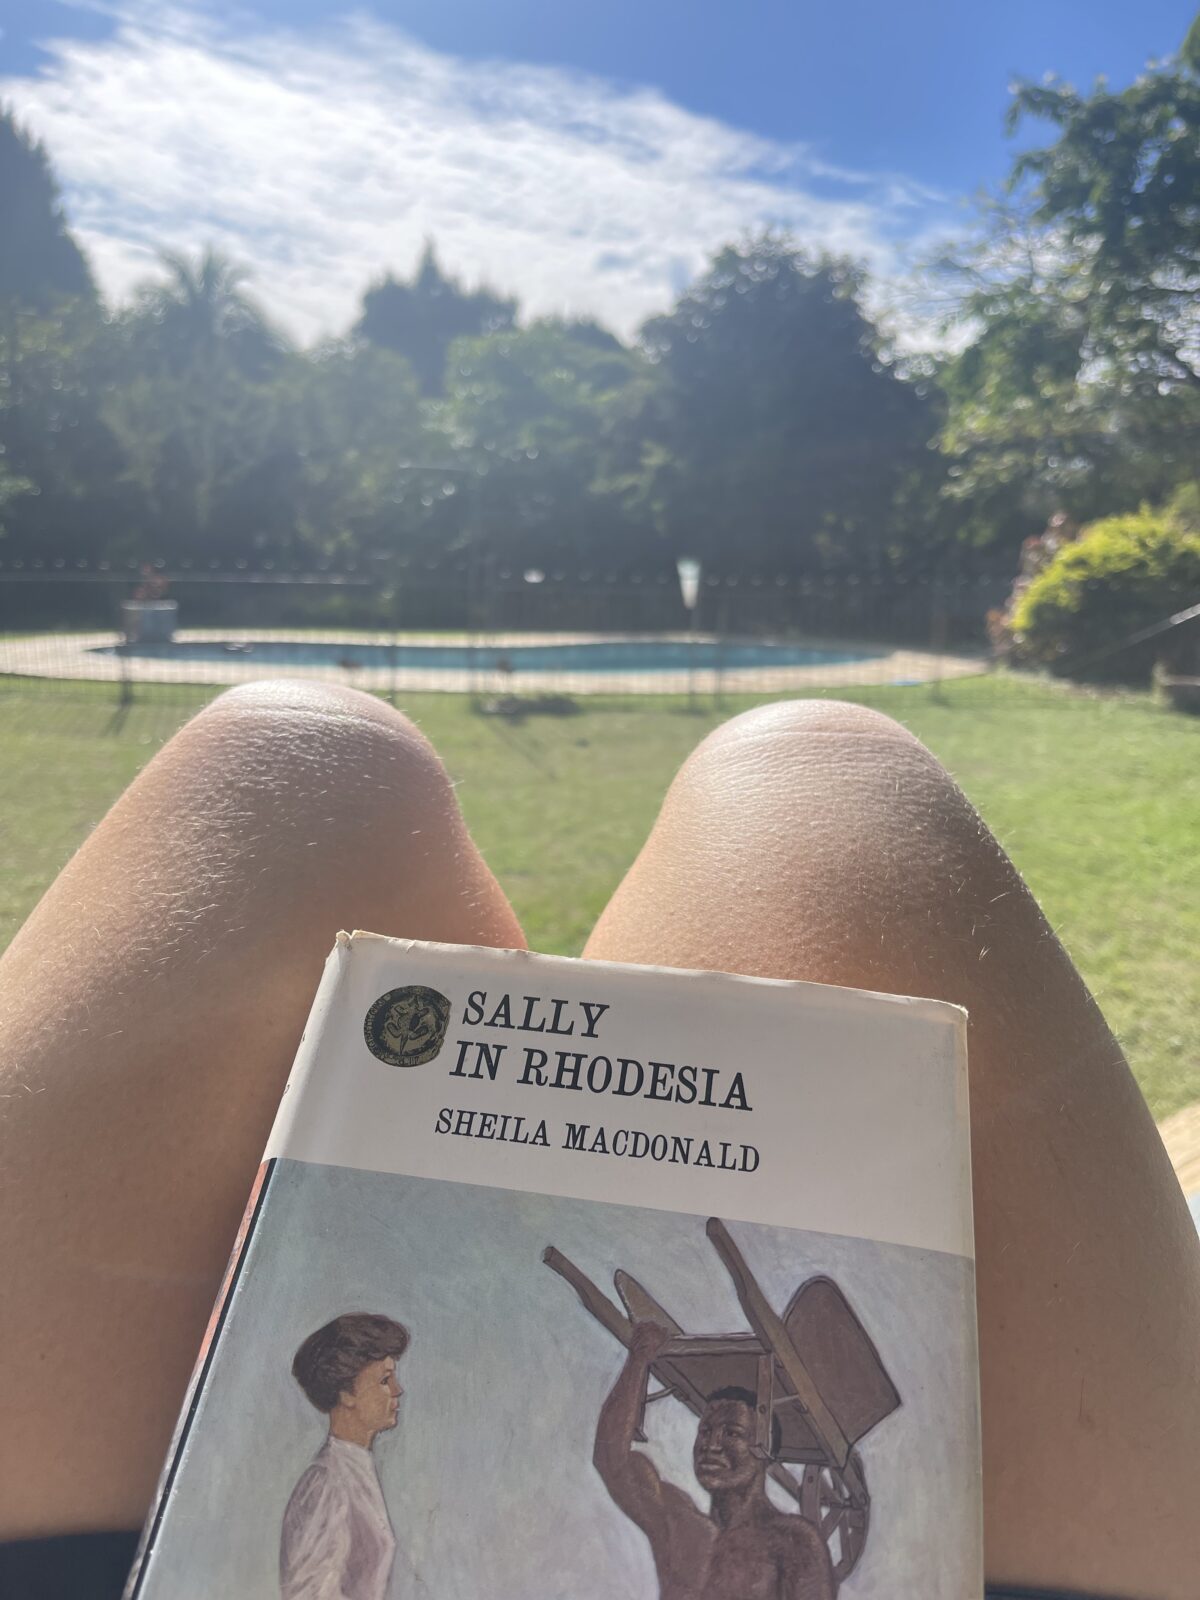 SALLY IN RHODESIA by Sheila McDonald